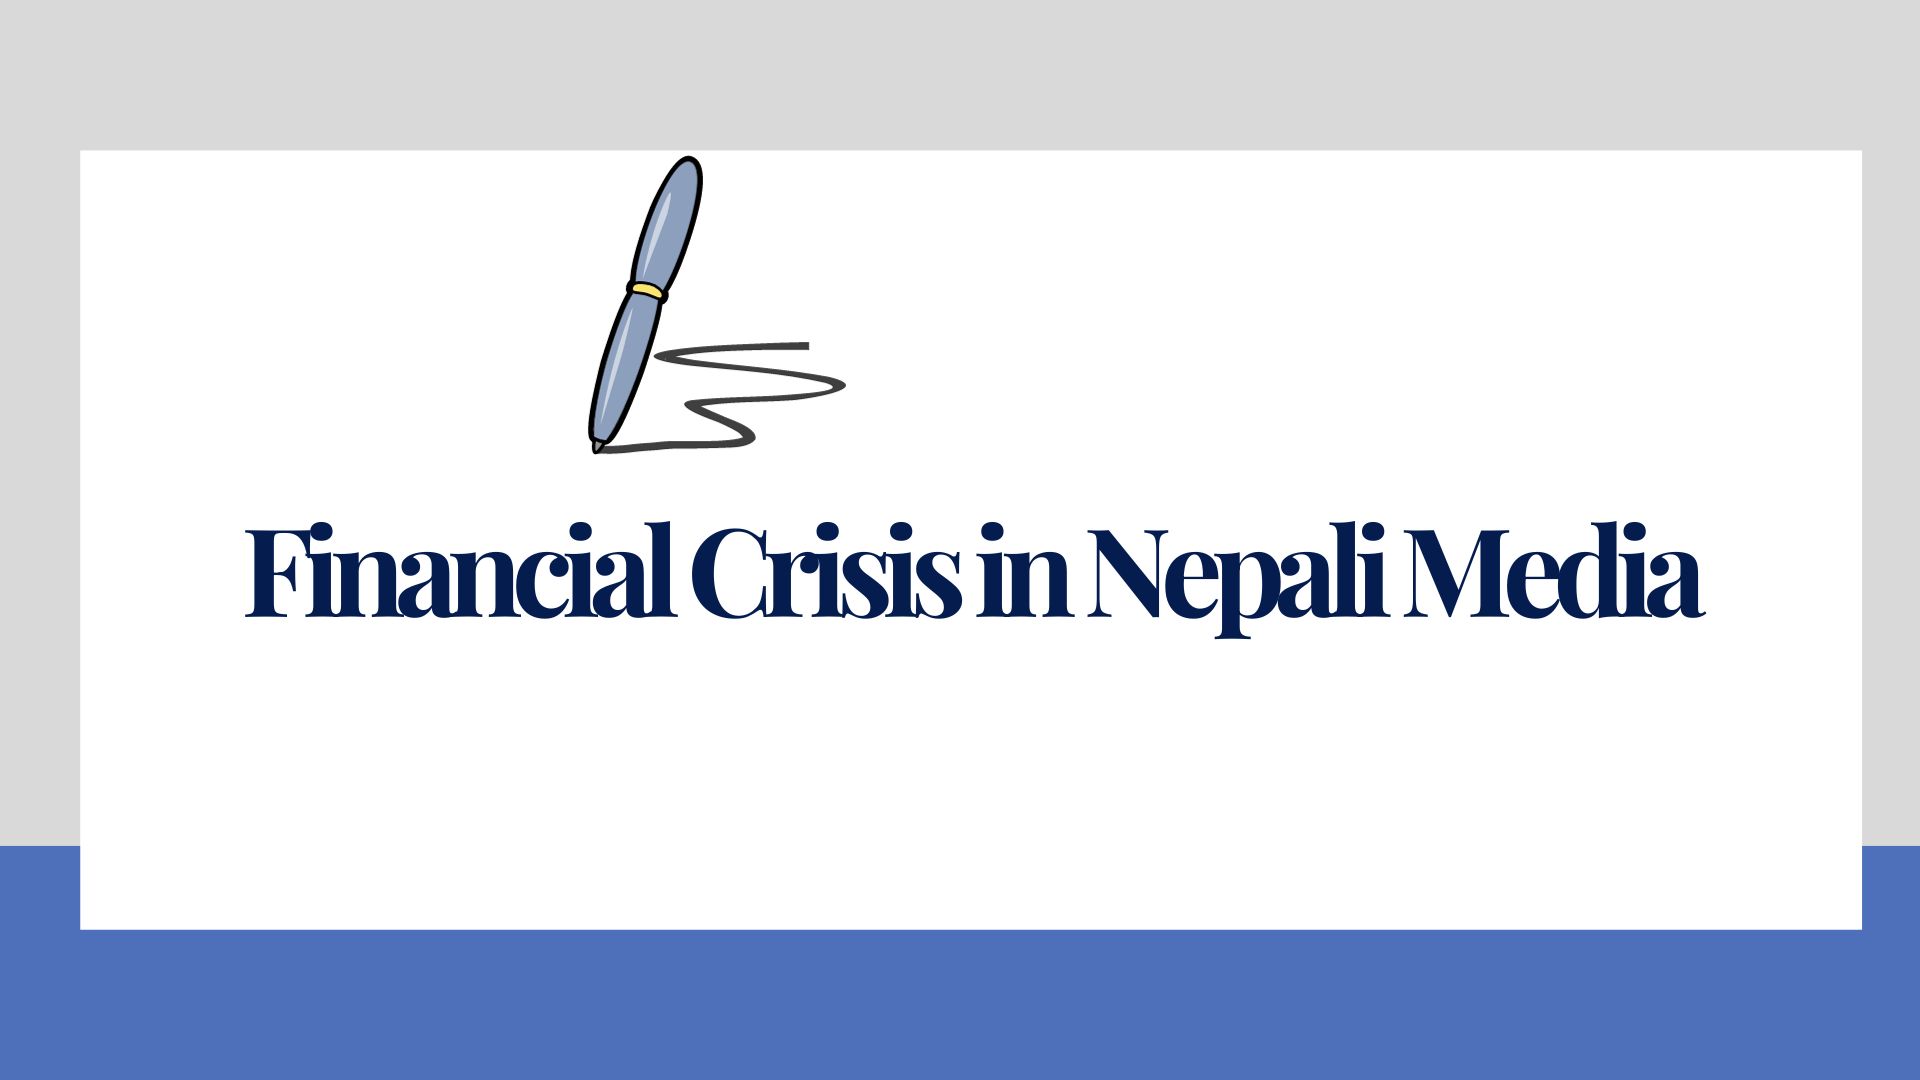 Nepali media faces sustainability crisis, says report   